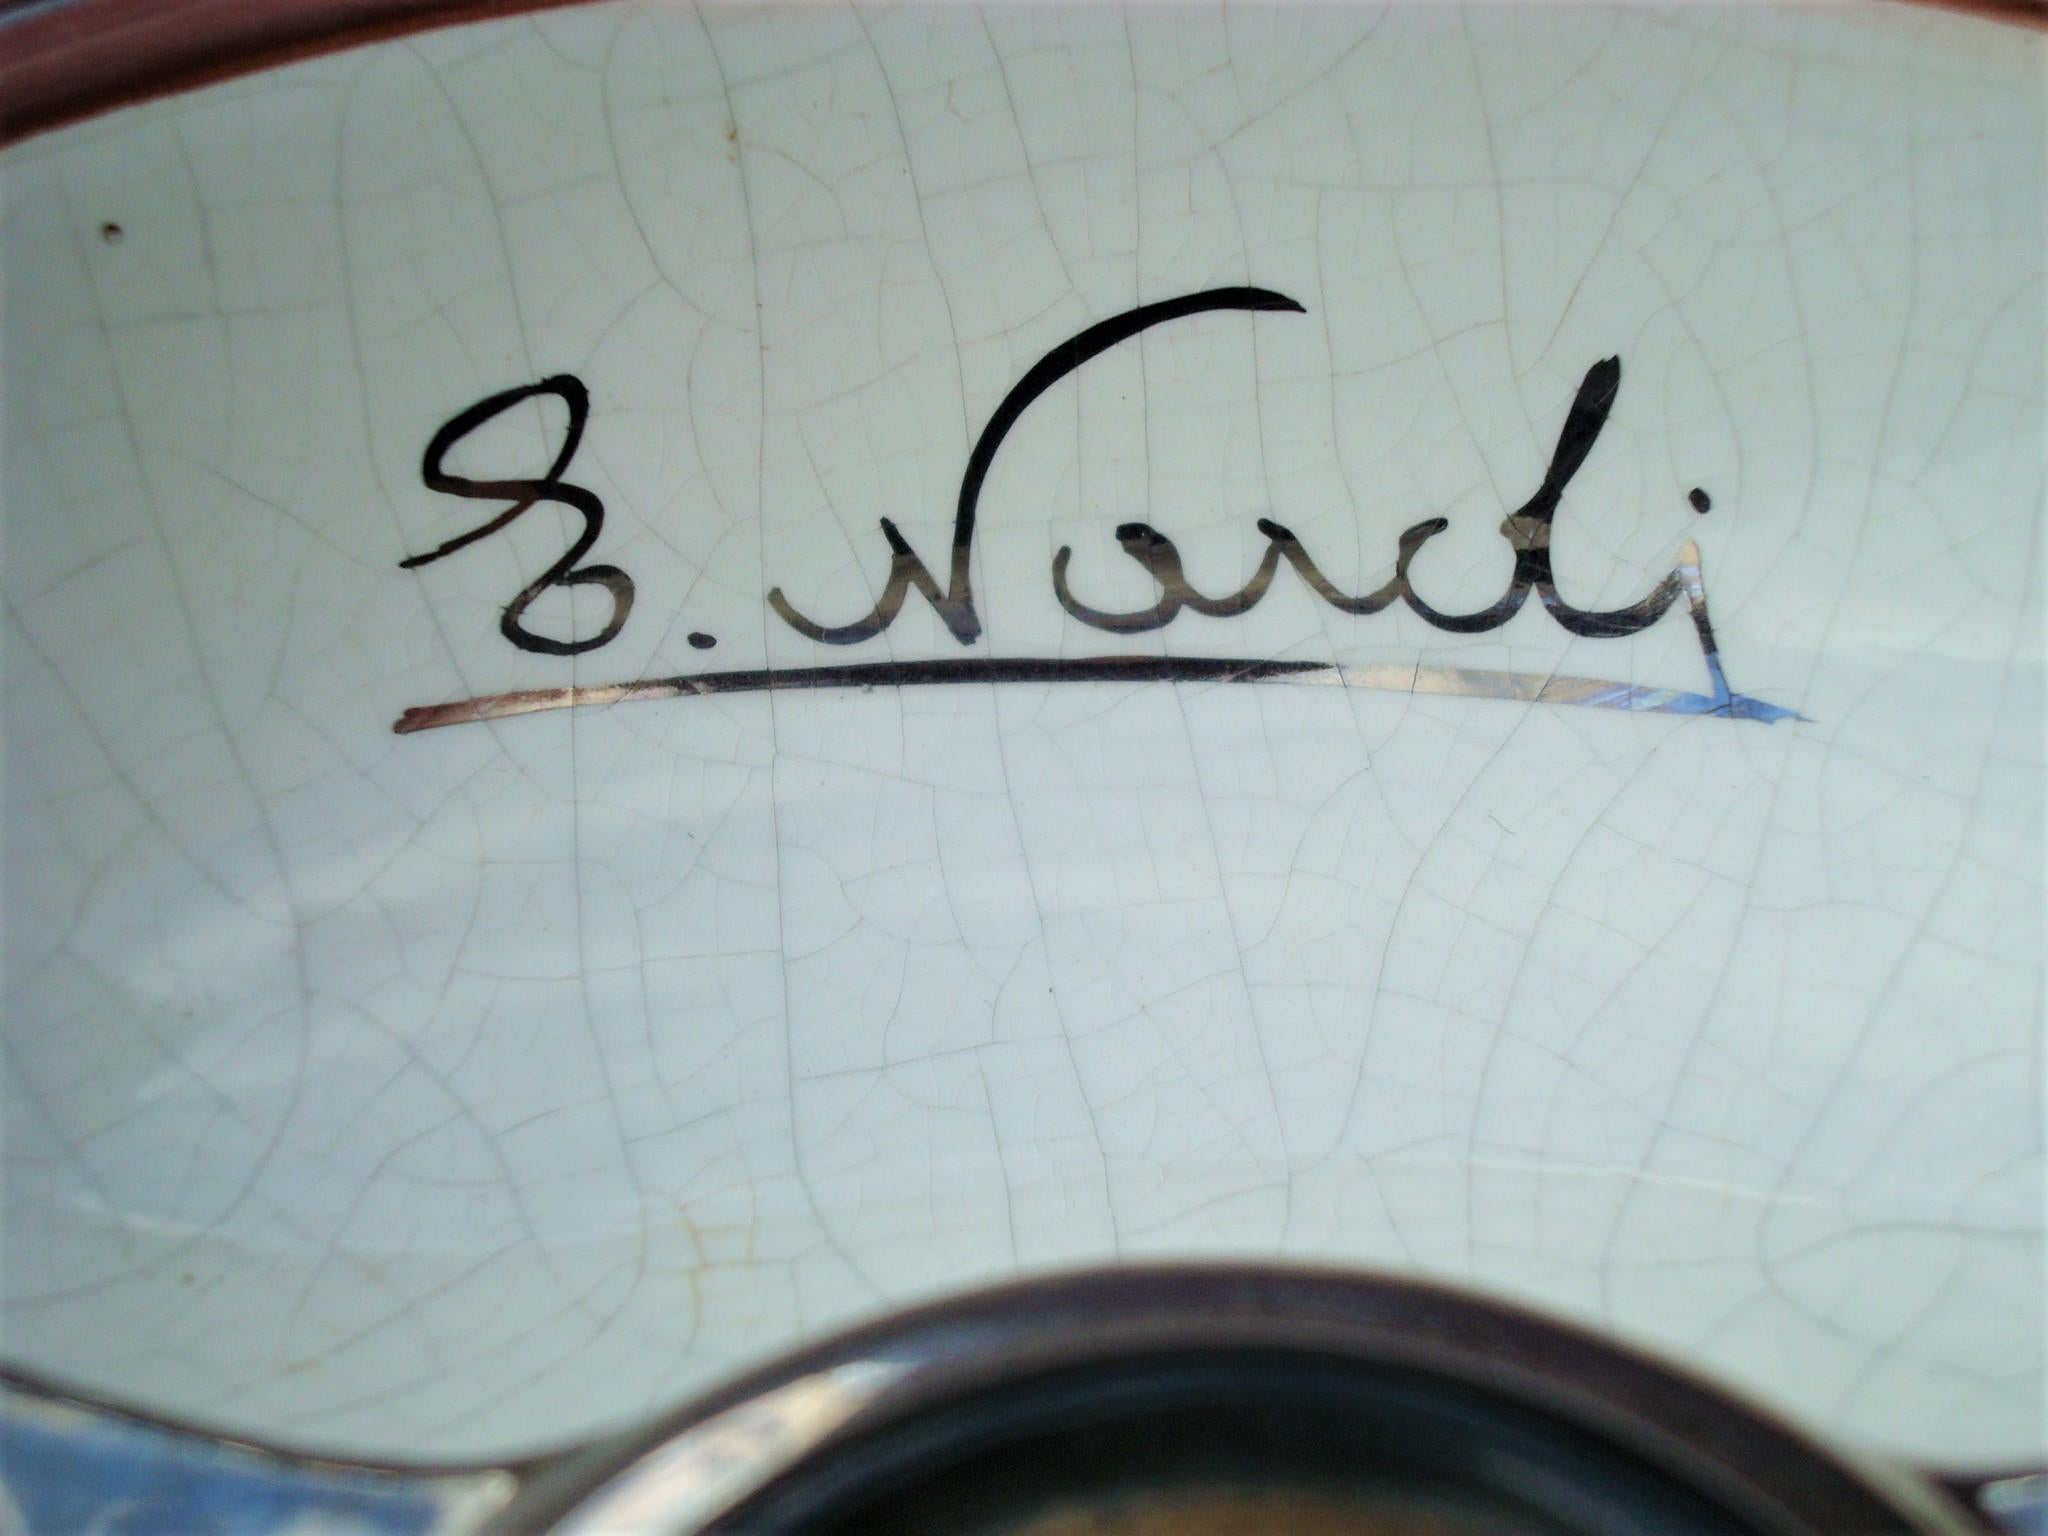 nardi signature